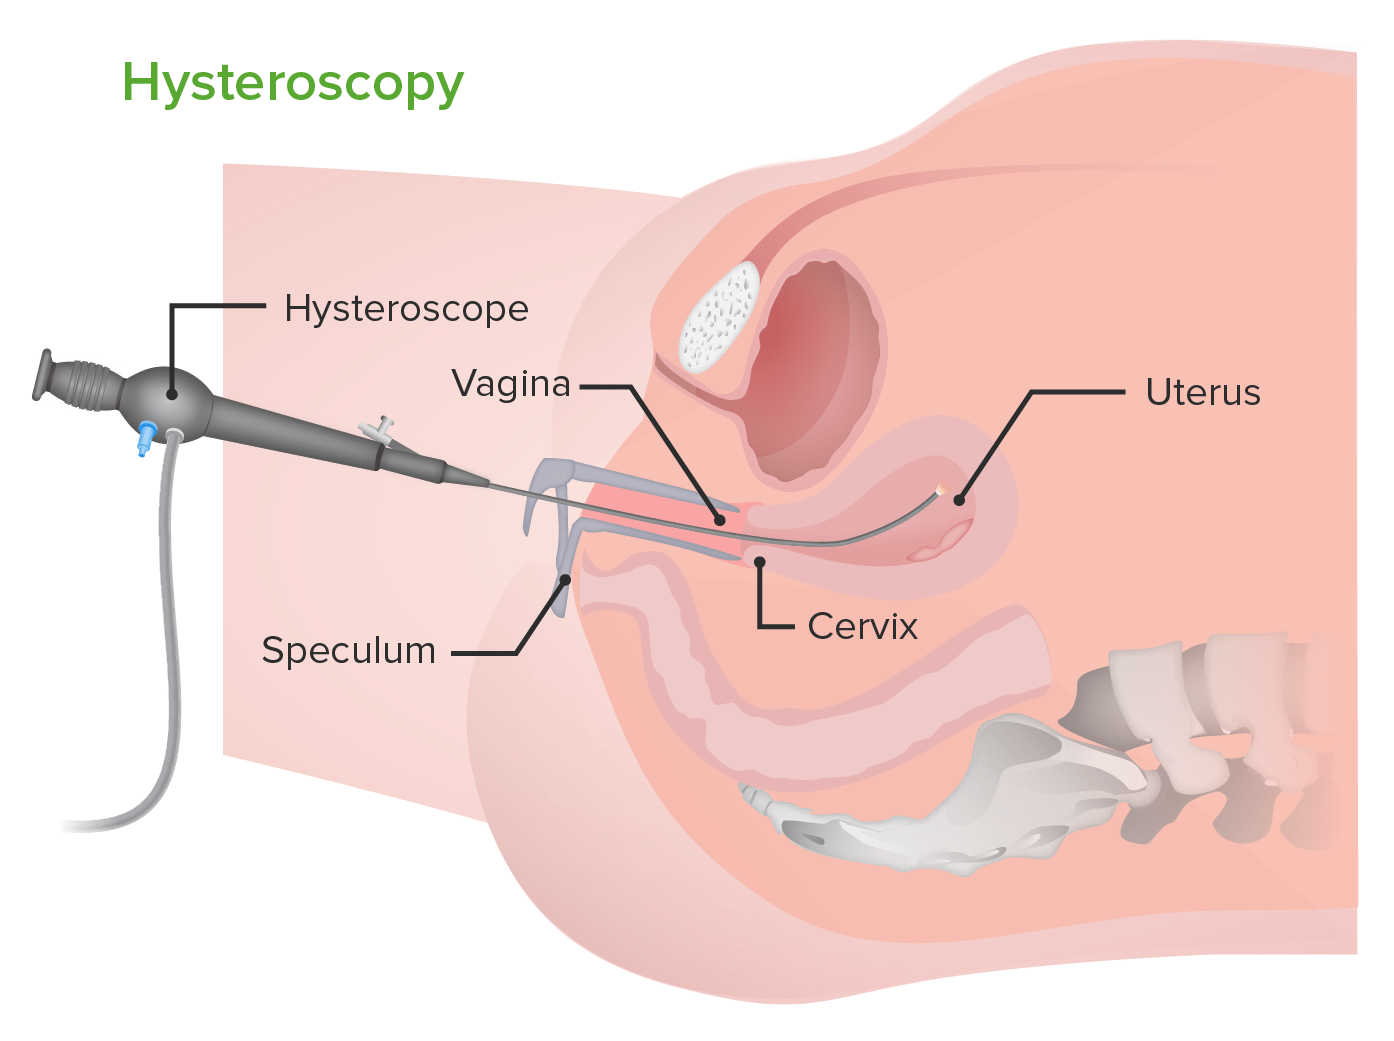 Hysteroscopy